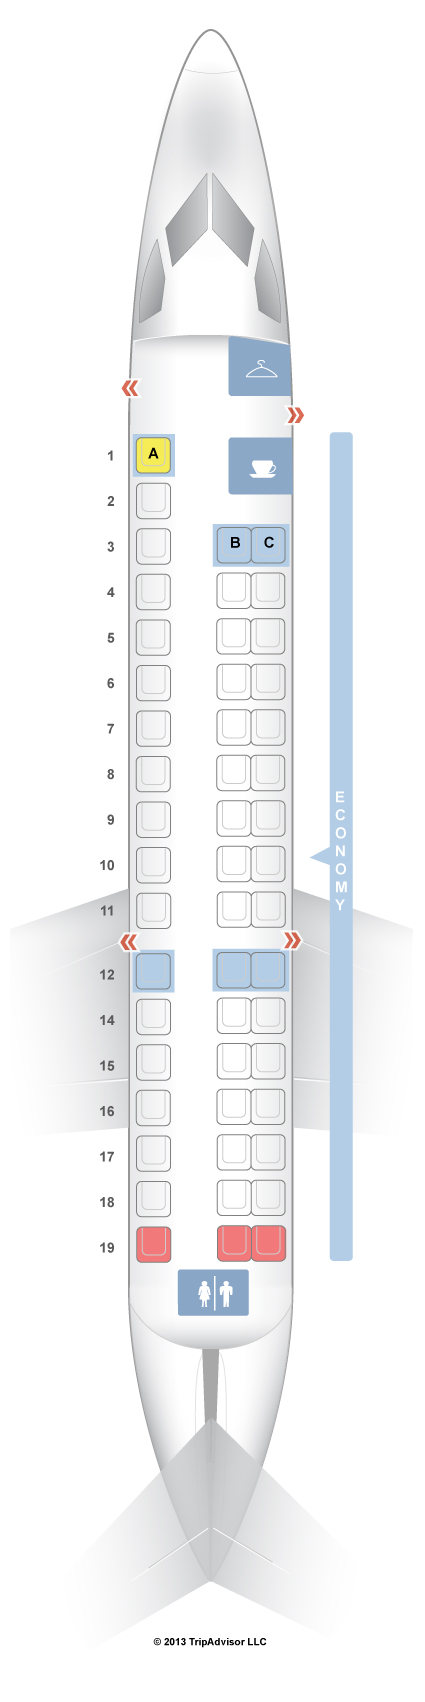 United Airlines Seating Chart Embraer Rj145 لم يسبق له مثيل الصور